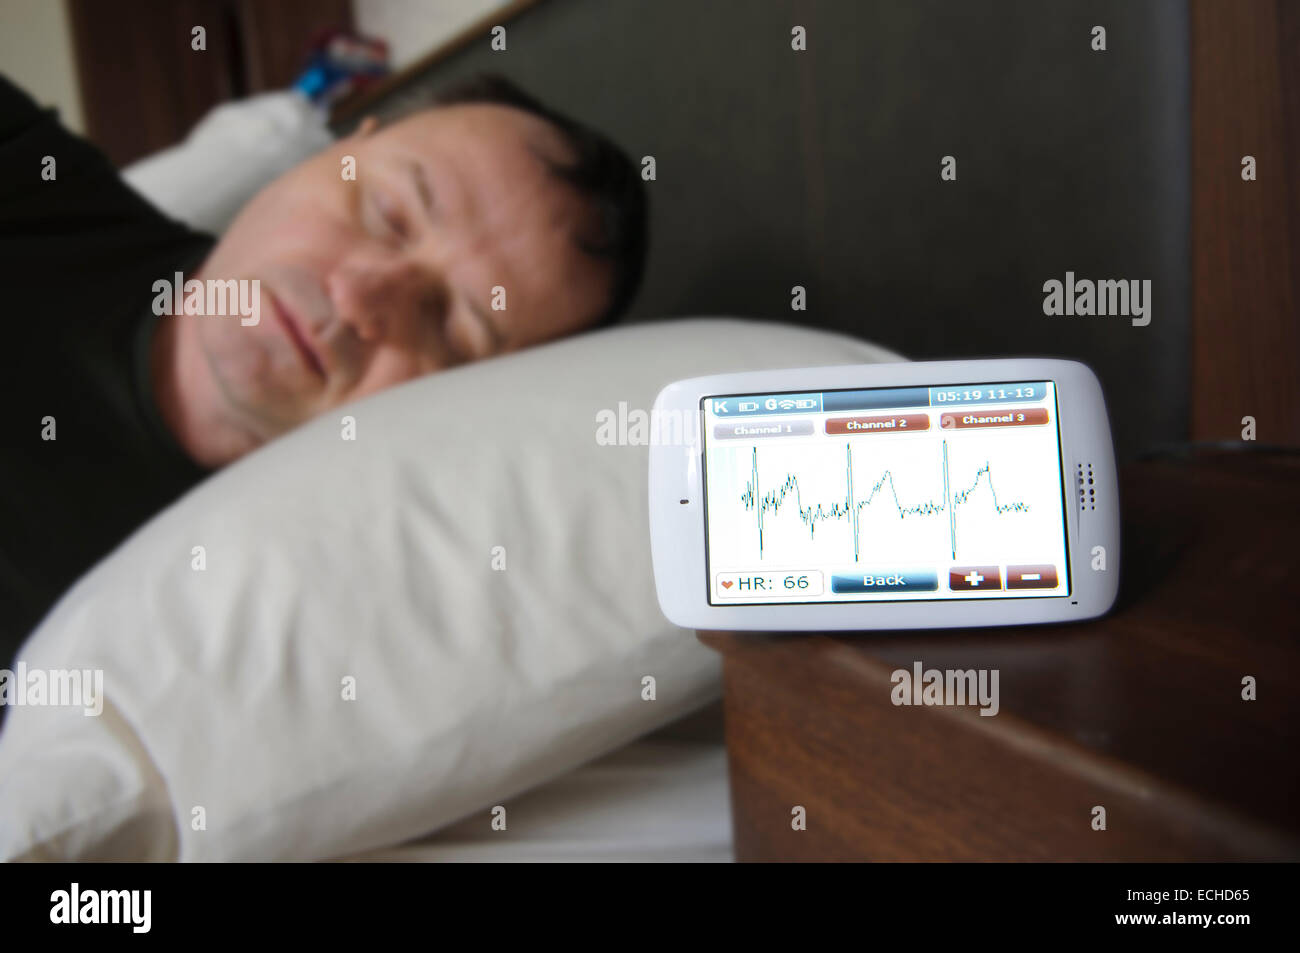 Man sleeping while having his ECG monitored using a Custo Kybe heart monitor. Stock Photo